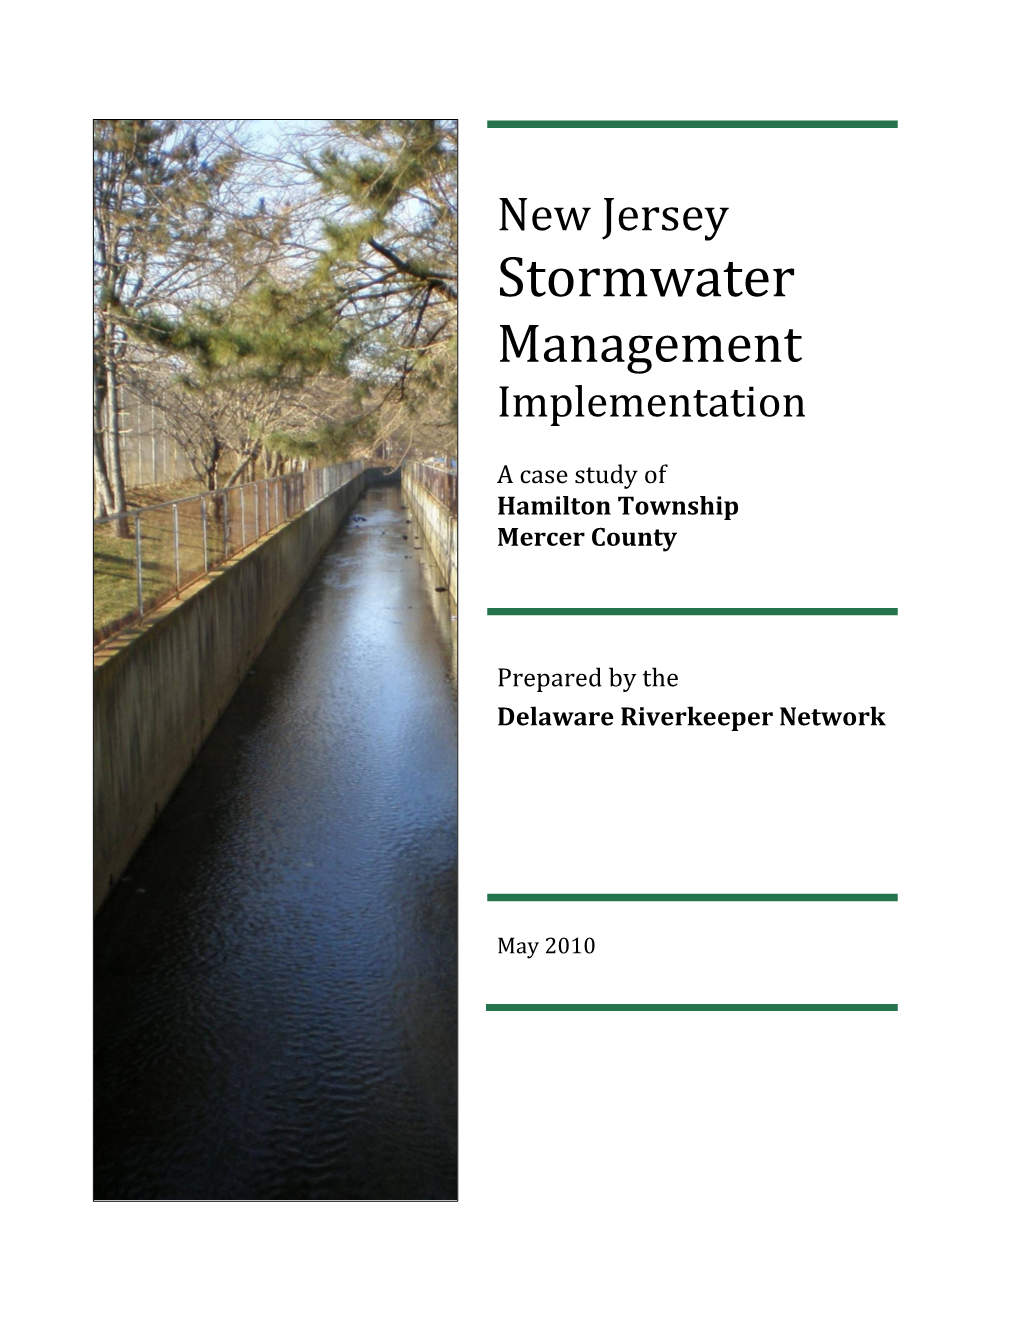 Hamilton Twp NJ Stormwater Management Implementation Report